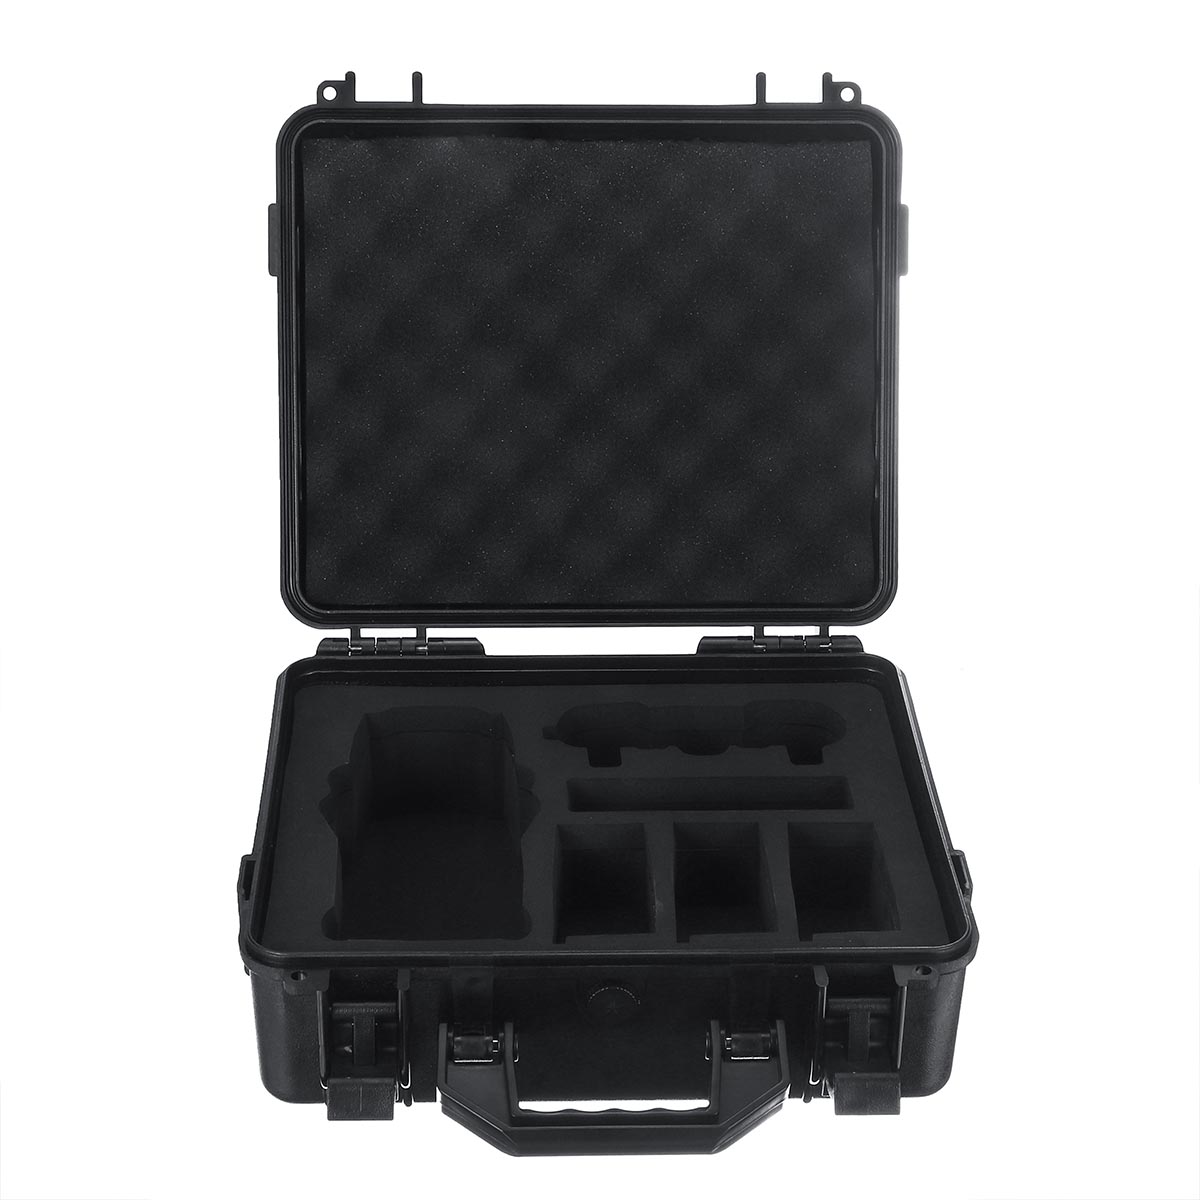 Shockproof-Portable-Carry-Hard-Case-Storage-Bag-Black-For-DJI-Mavic-2-Pro--Zoom-1780566-10